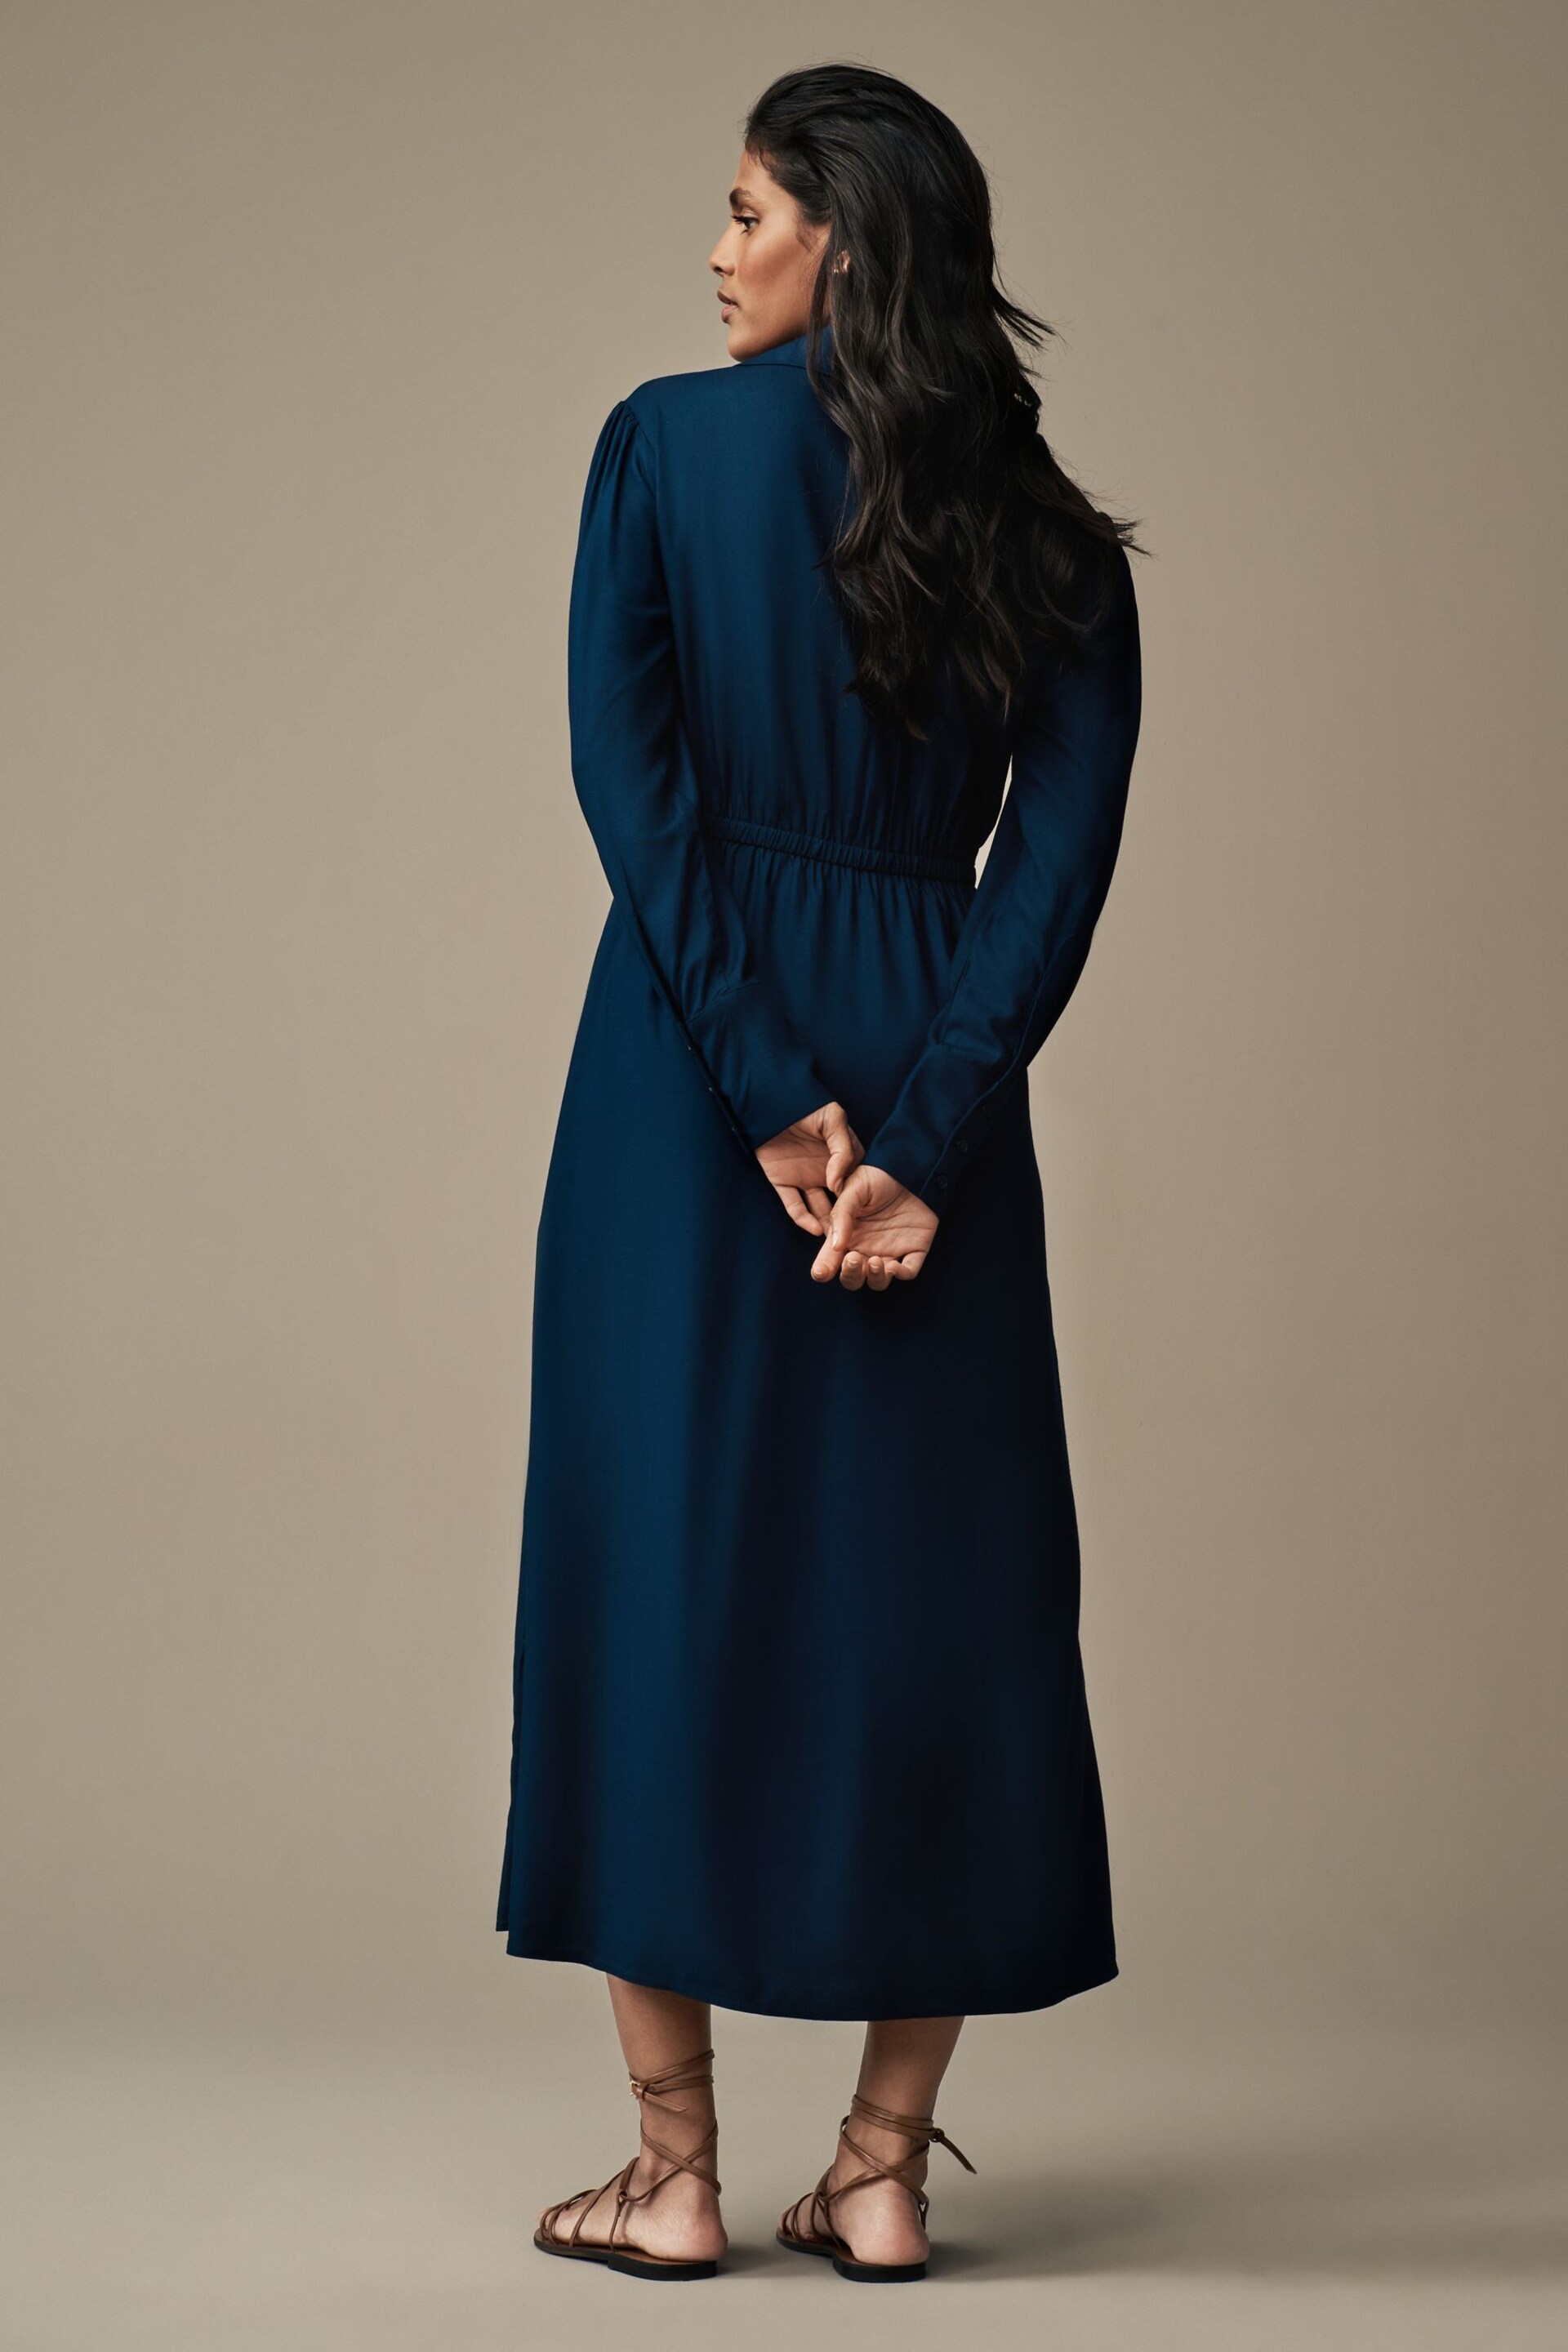 Laura Ashley Navy Midaxi Shirt Dress - Image 2 of 5